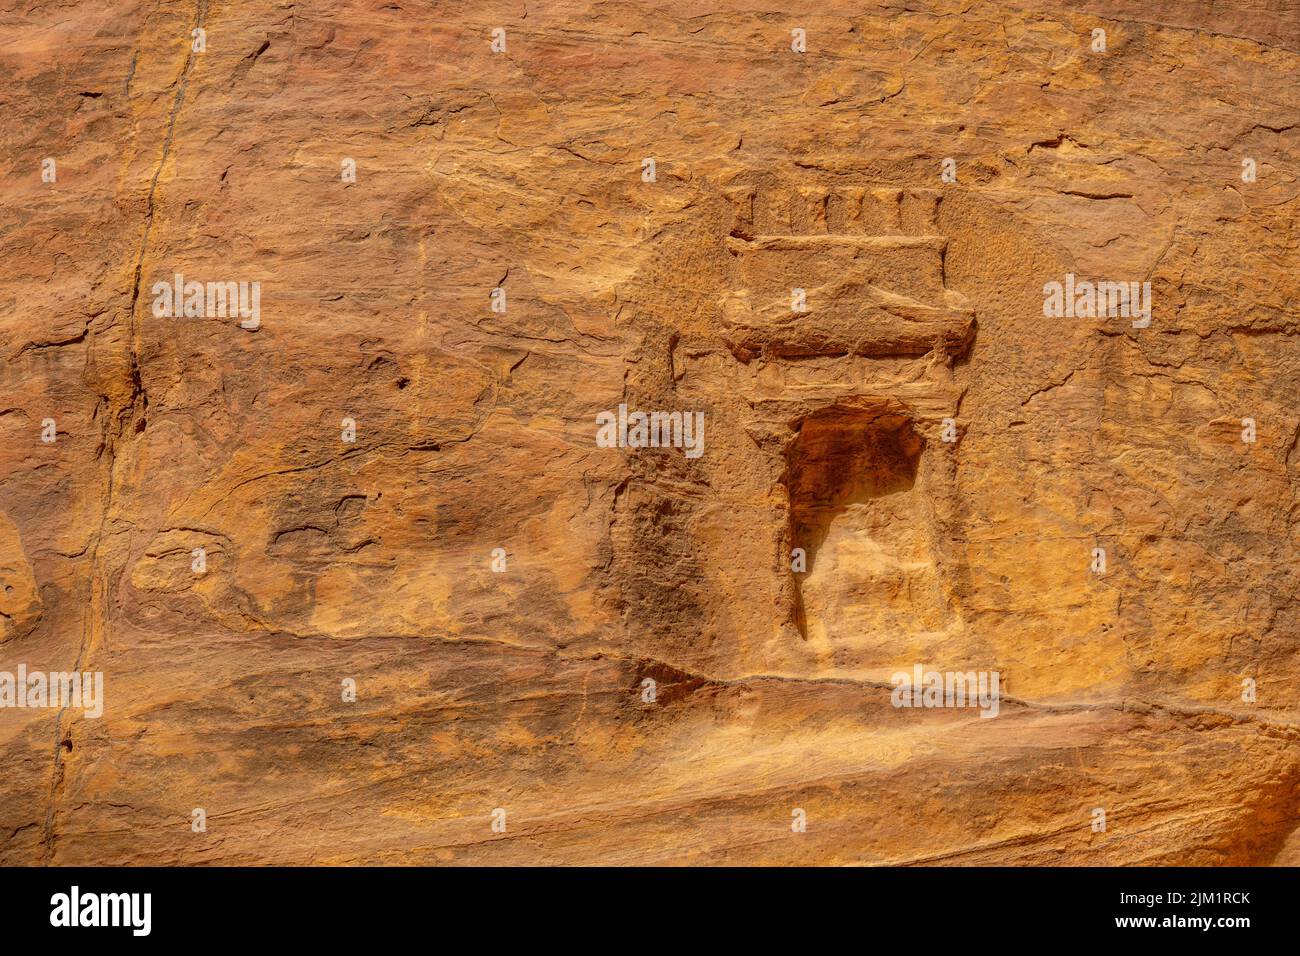 Nabatean rock carvings in Al-Siq the canyon entrance to Petra Jordan. Stock Photo